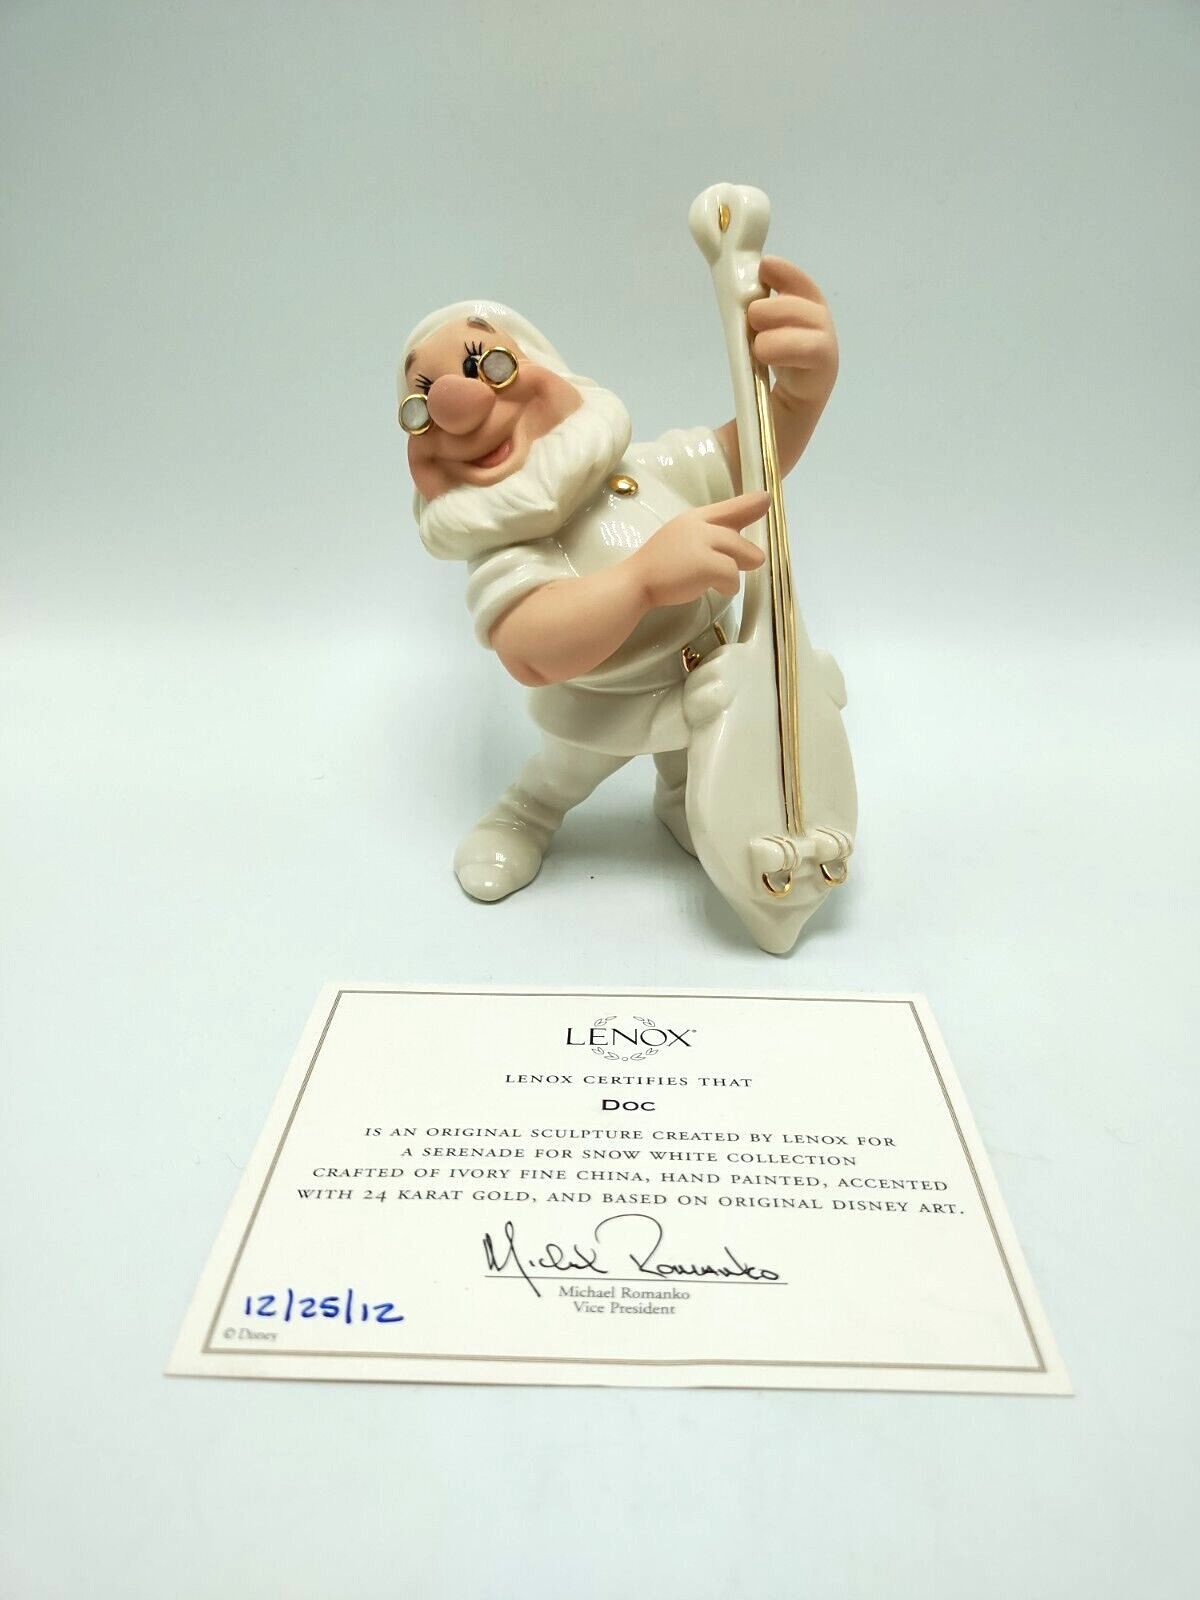 A Serenade For Snow White Collection Doc Disney Showcase Lenox Figurine, Retired